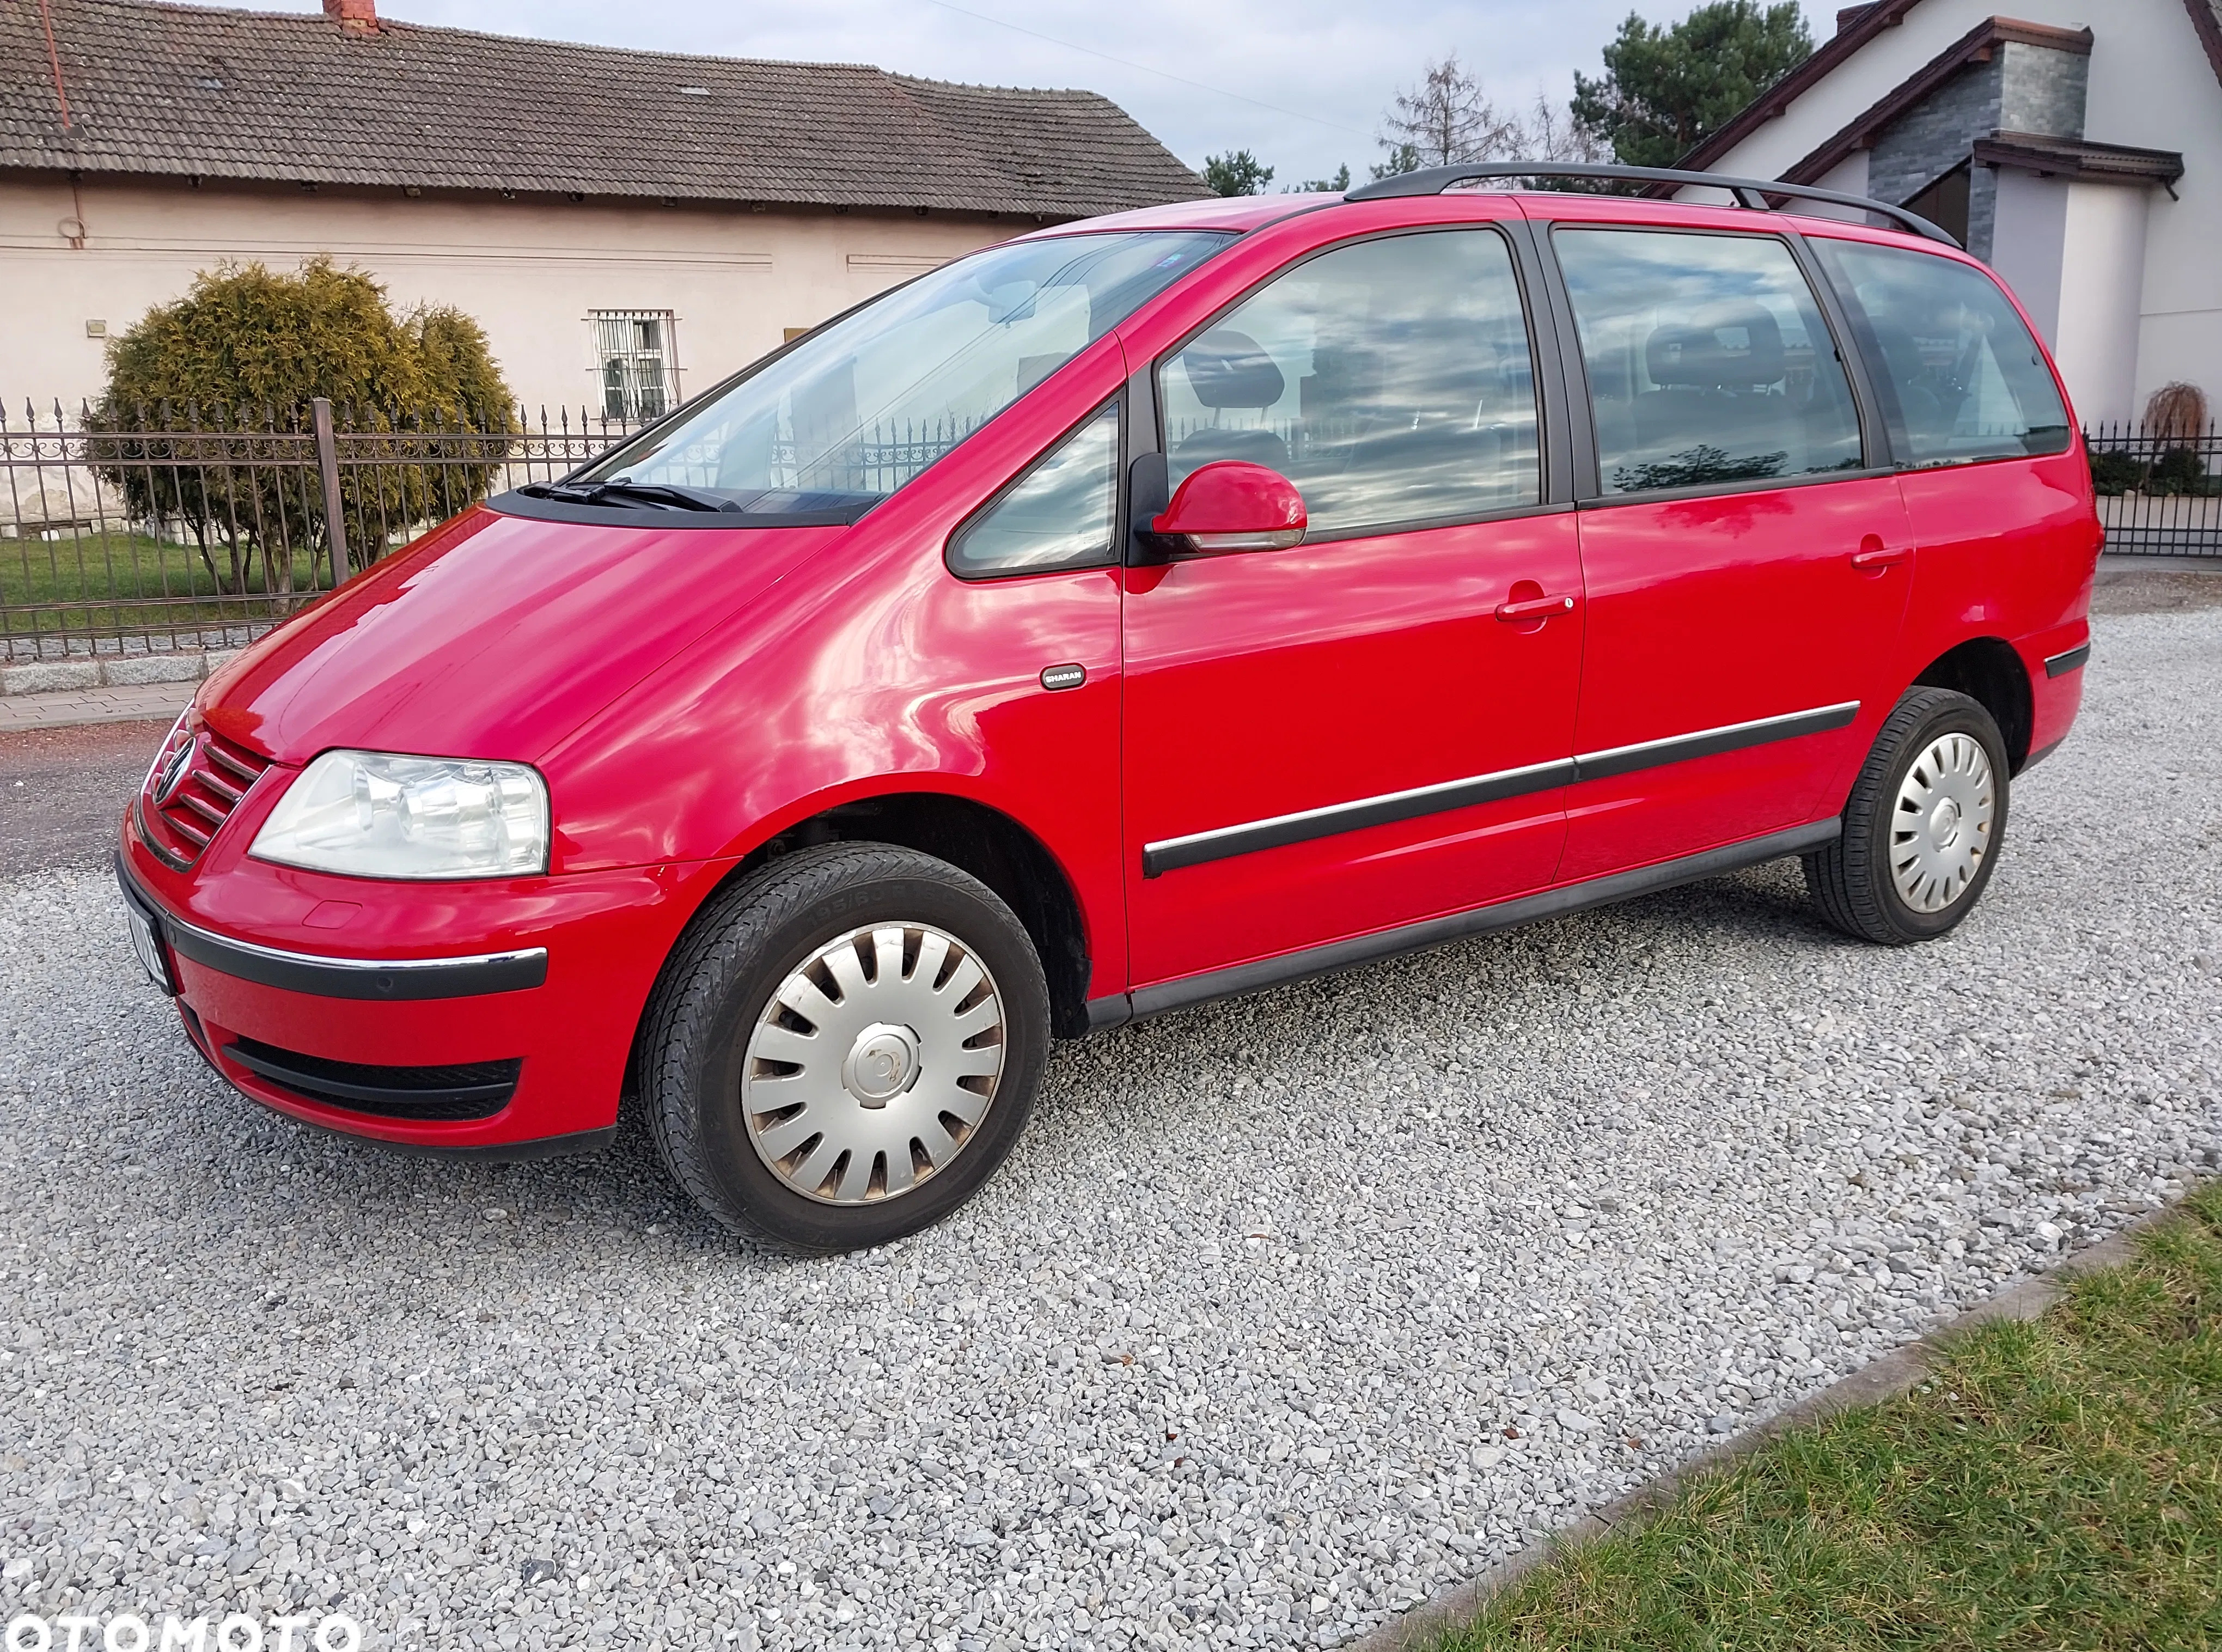 volkswagen Volkswagen Sharan cena 16900 przebieg: 284000, rok produkcji 2004 z Białogard